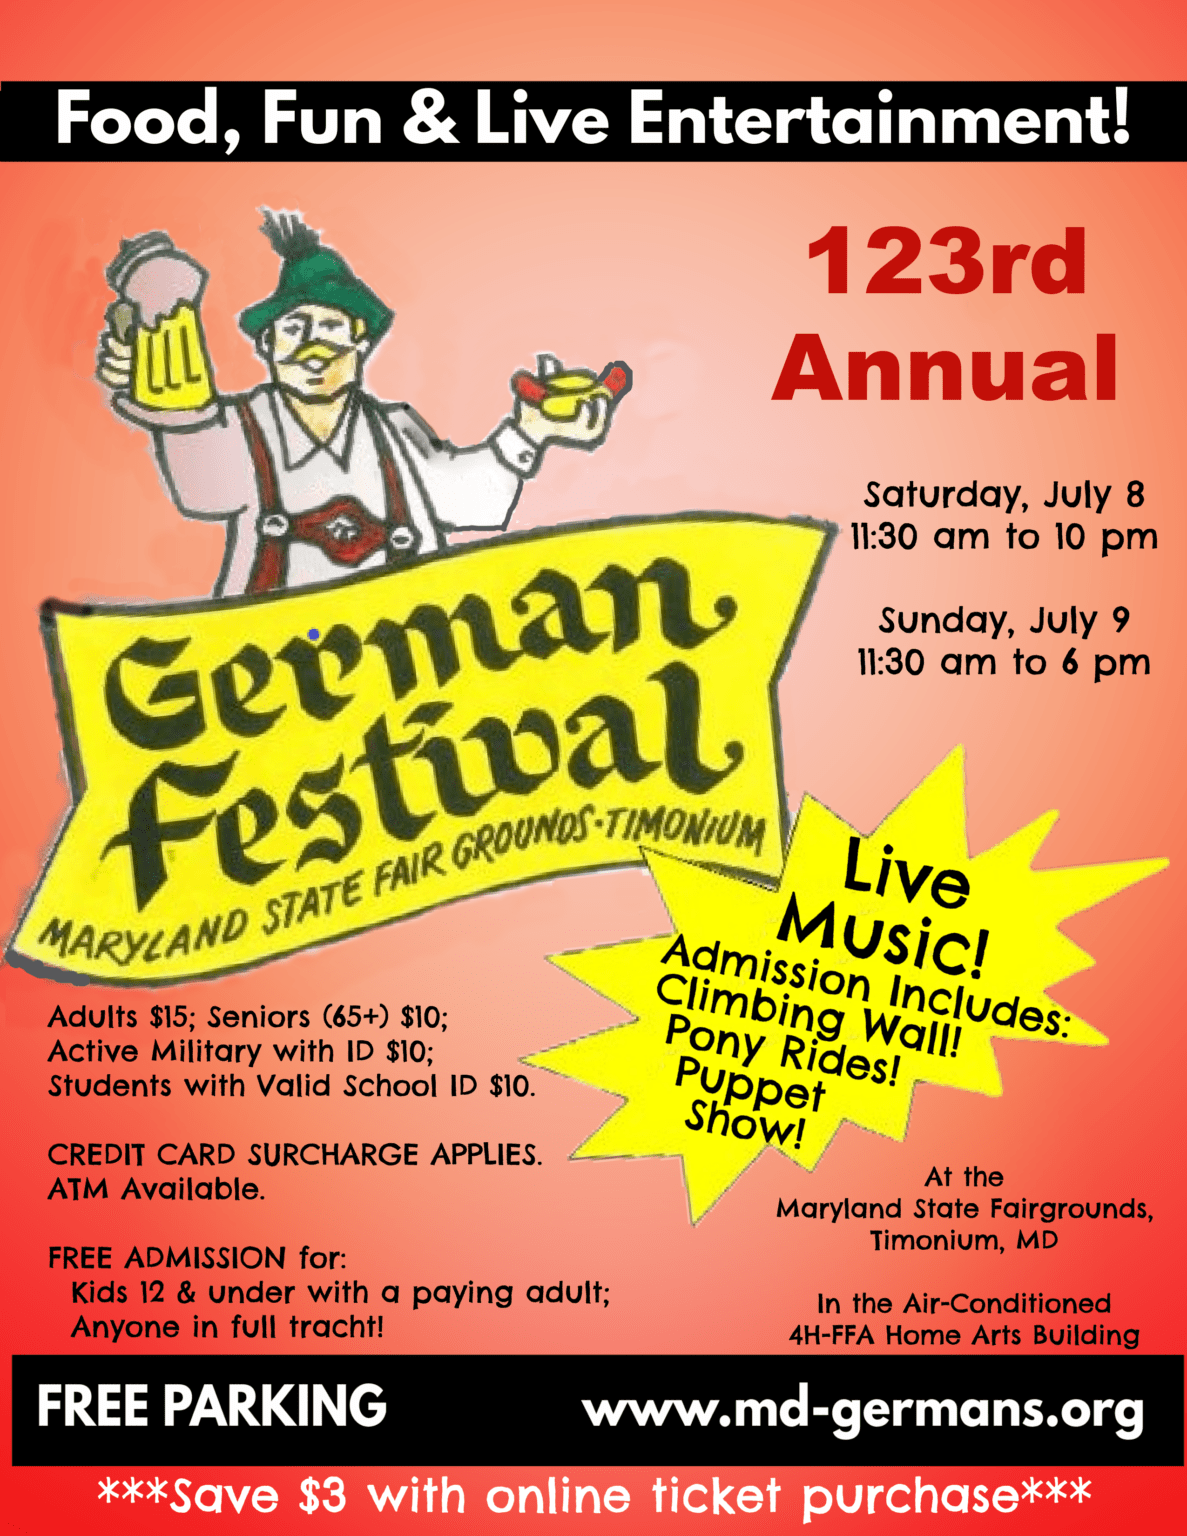 The Maryland German Festival